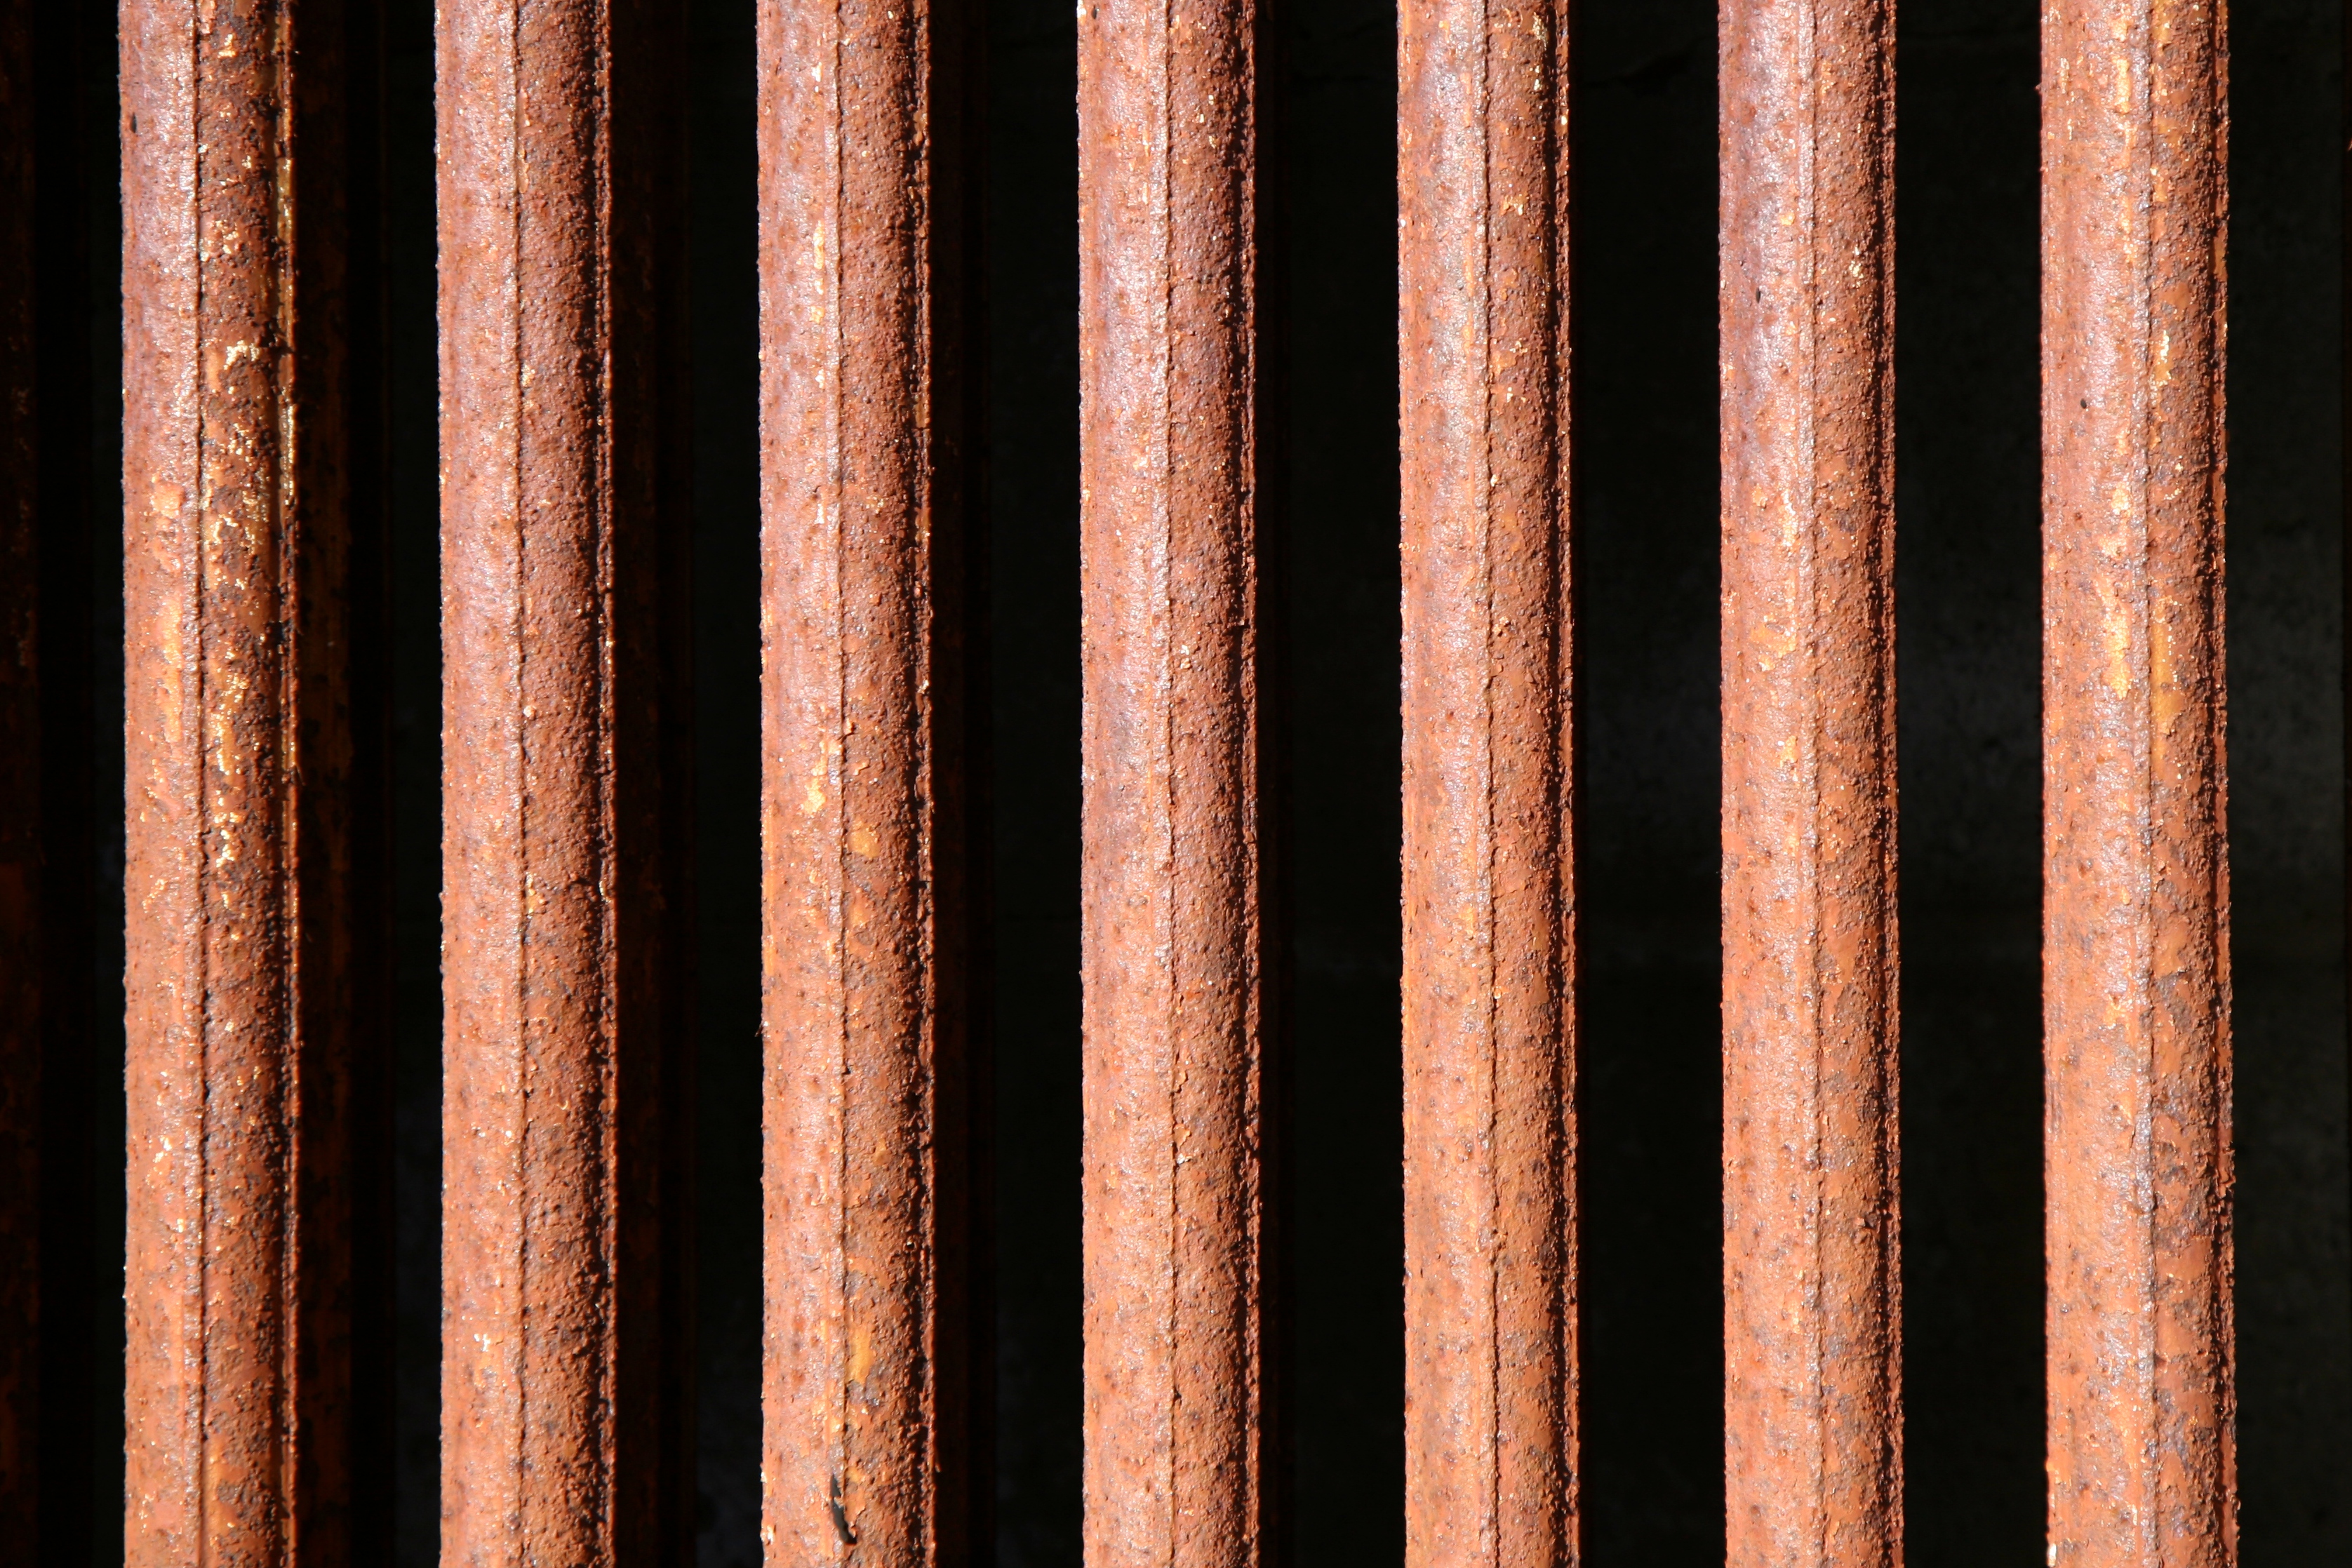 File:2011-02-11 Rusty radiator bars.jpg - Wikimedia Commons